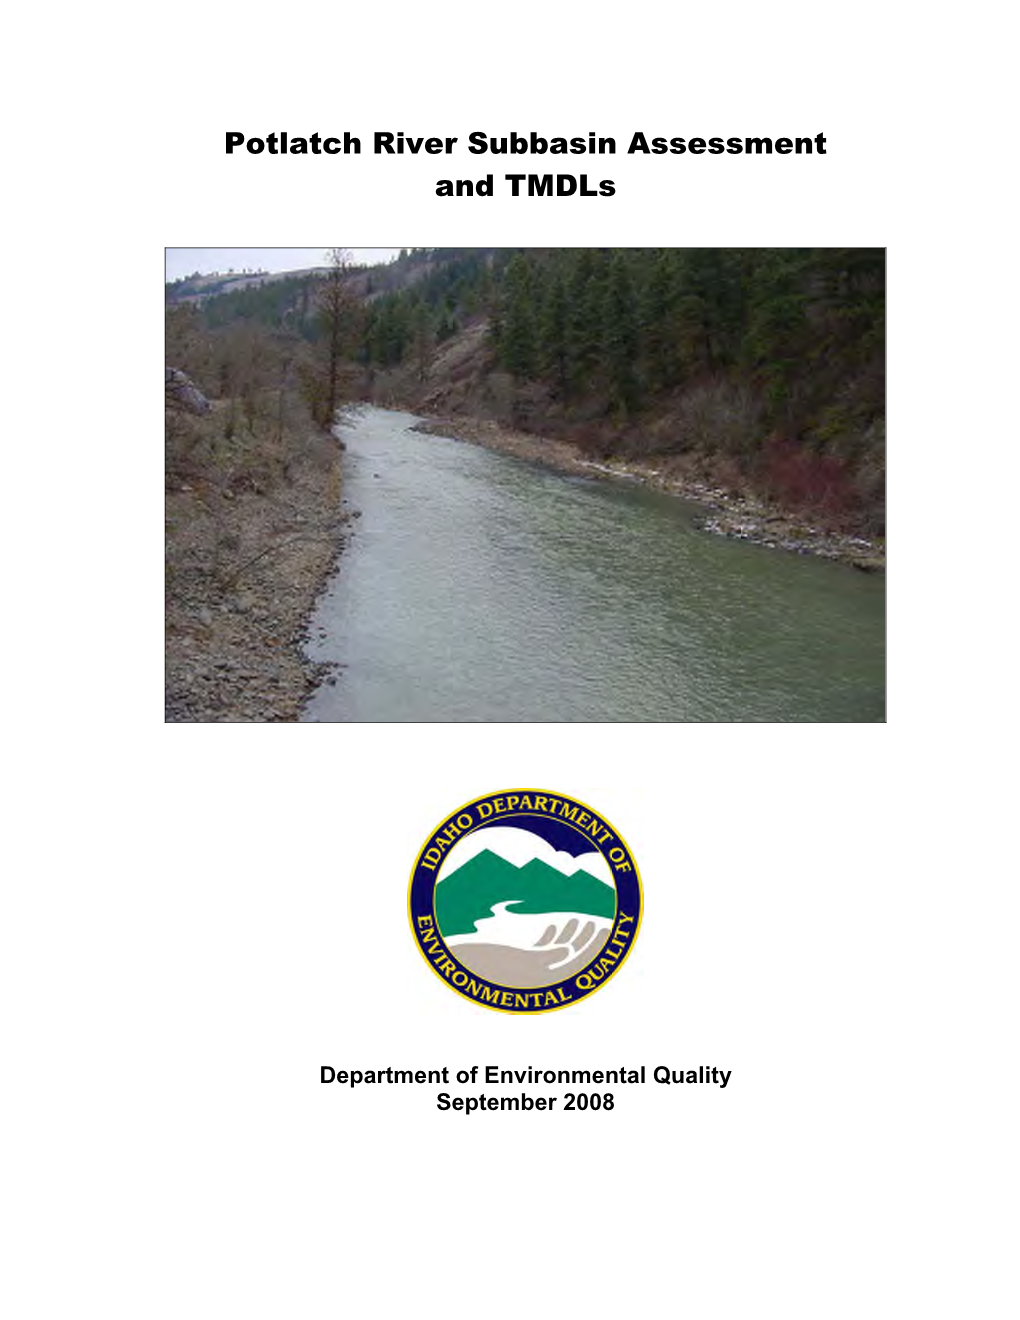 Potlatch River Subbasin Assessment and Tmdls